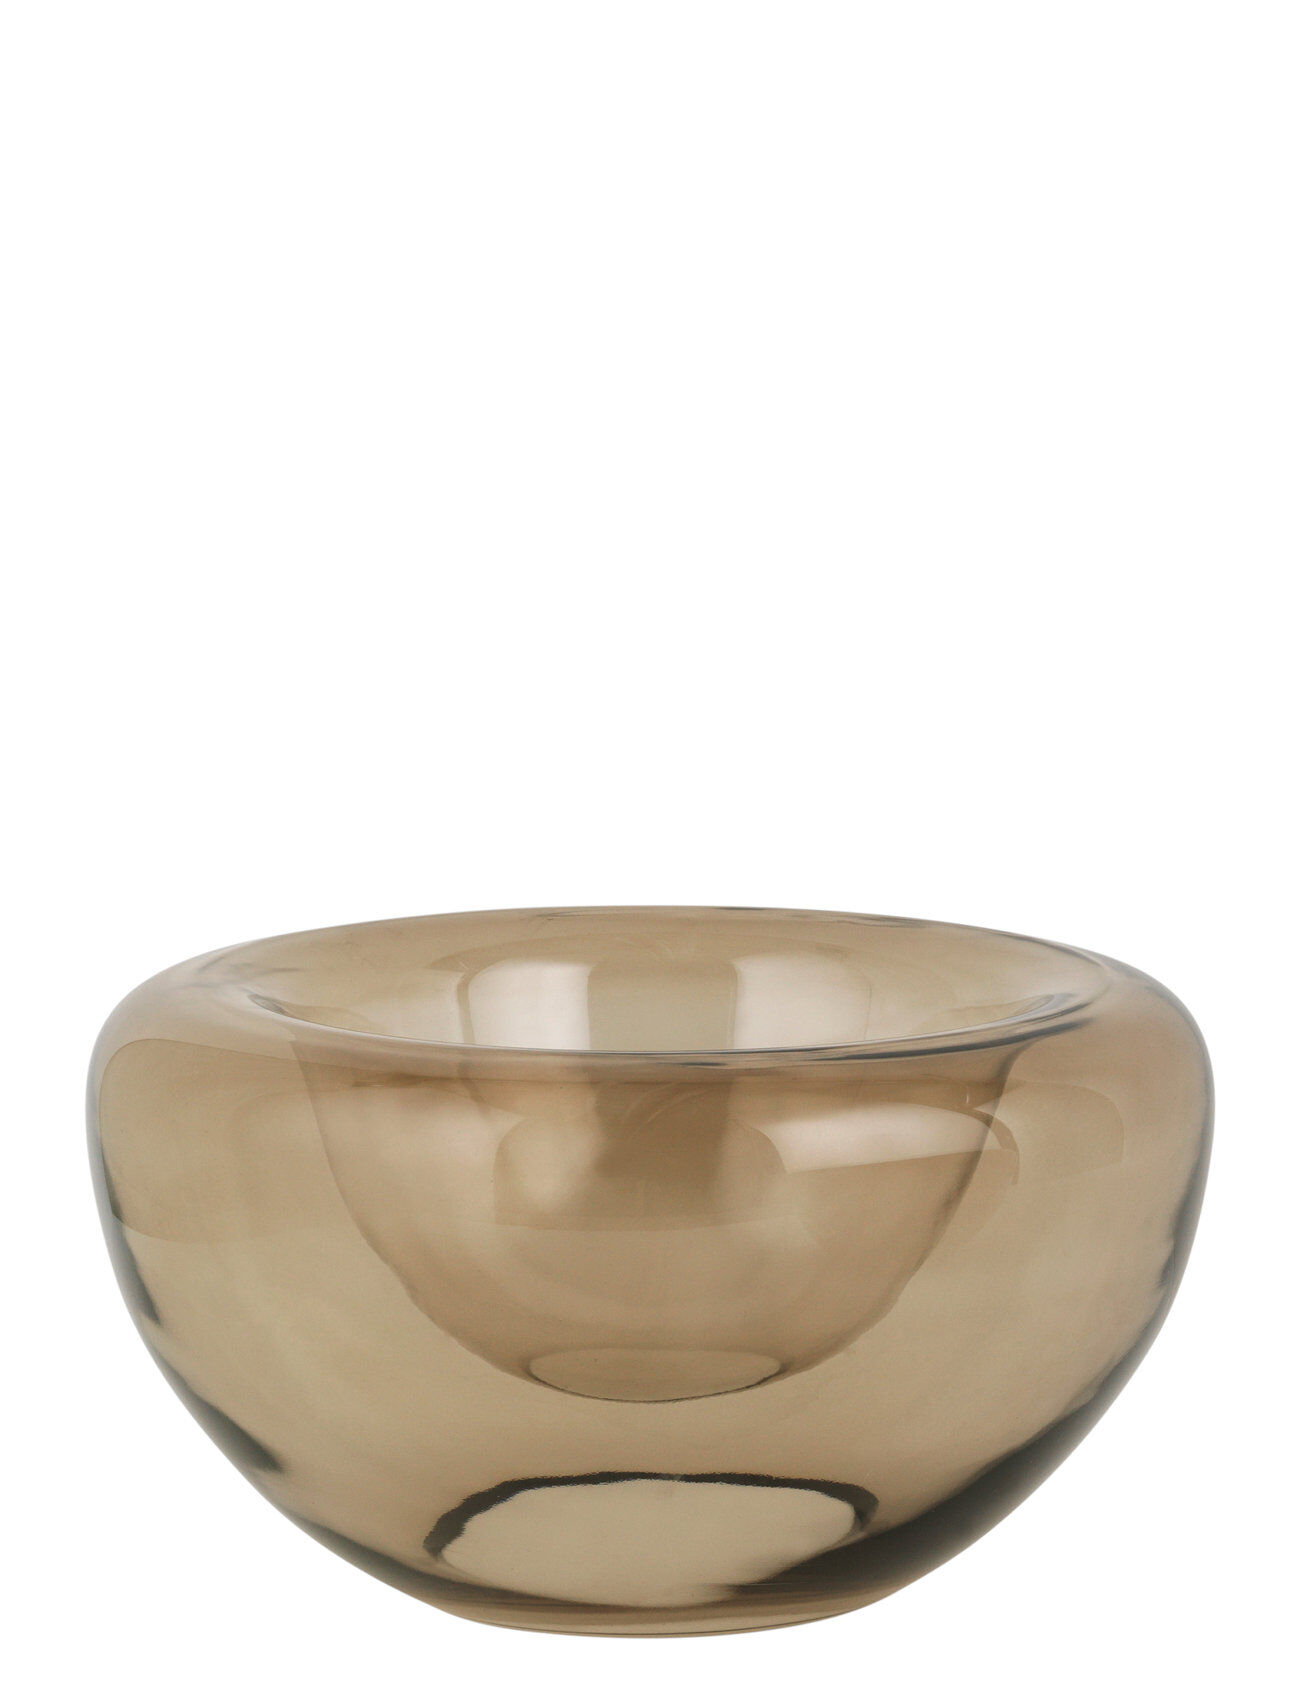 Kristina Dam Studio Opal Bowl - Large - Glass Home Decoration Decorative Platters & Bowls Brun Kristina Dam Studio